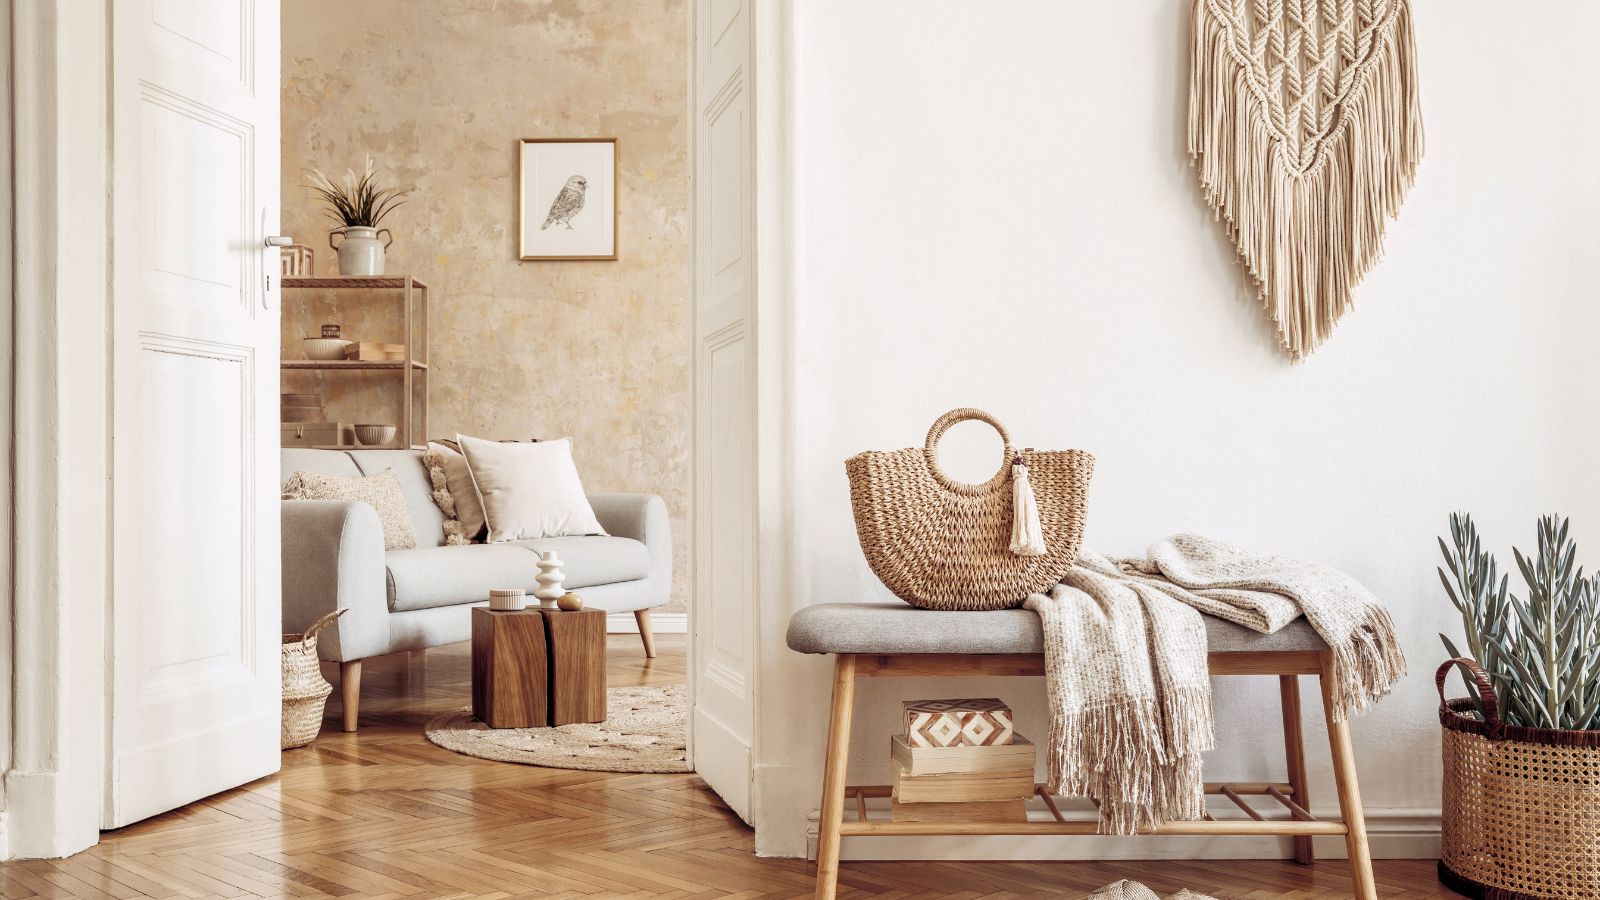 simplicity in style: minimalist home decor charms joscorena.my.id